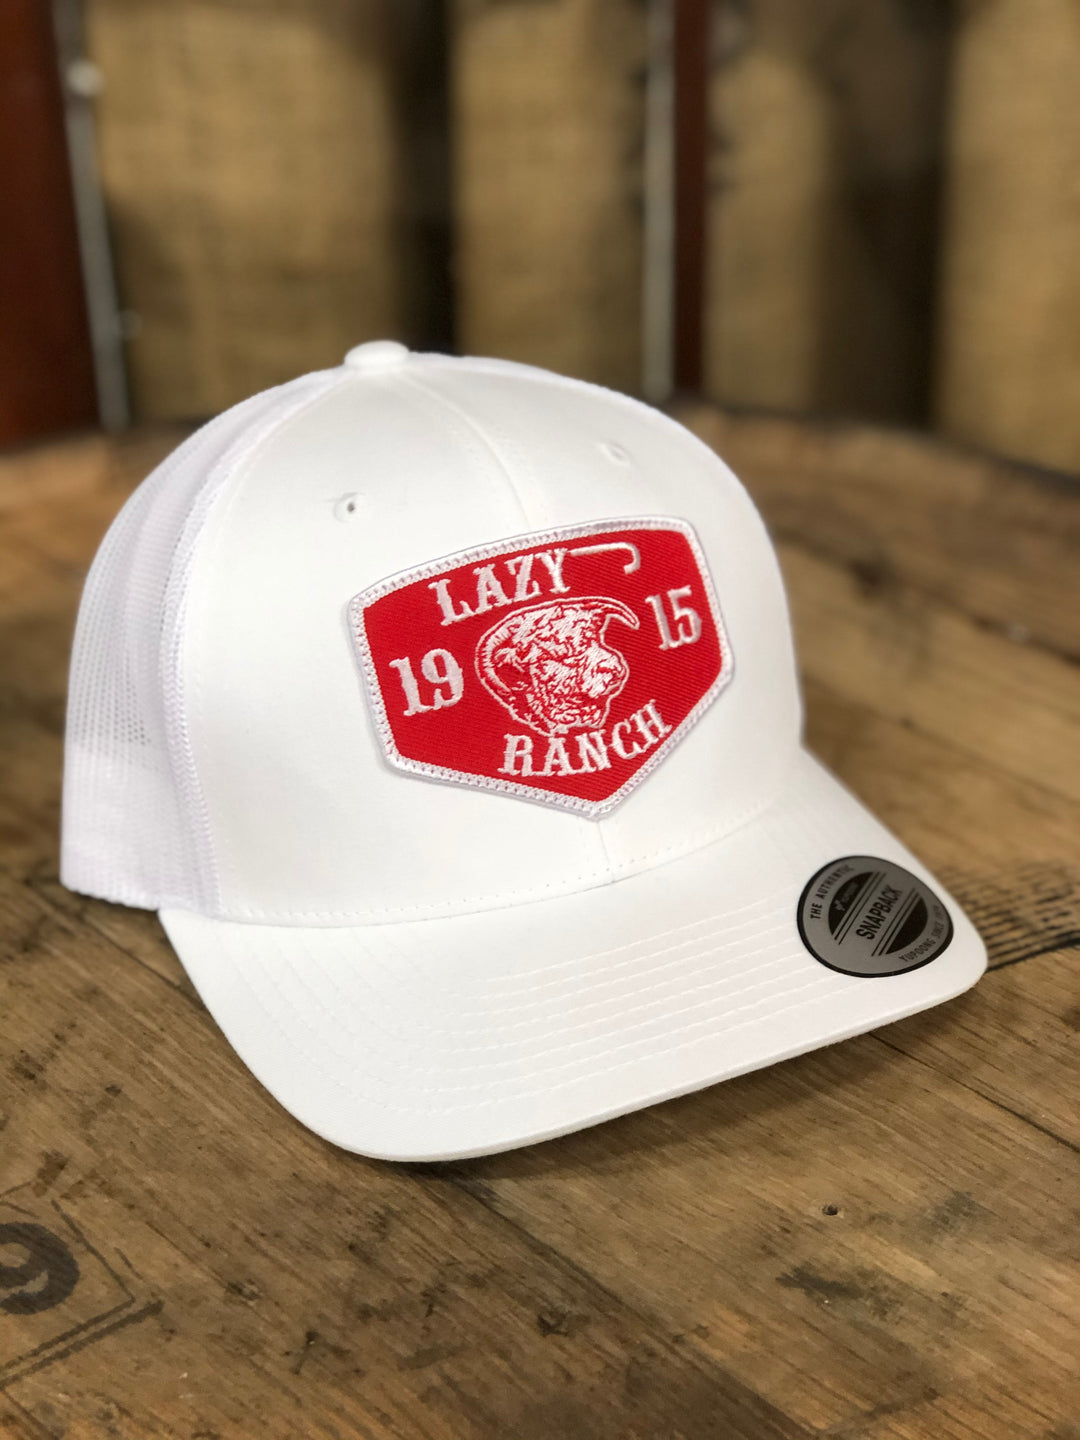 Lazy J Ranch Wear White & White 3.5" Red Ranch Patch Cap